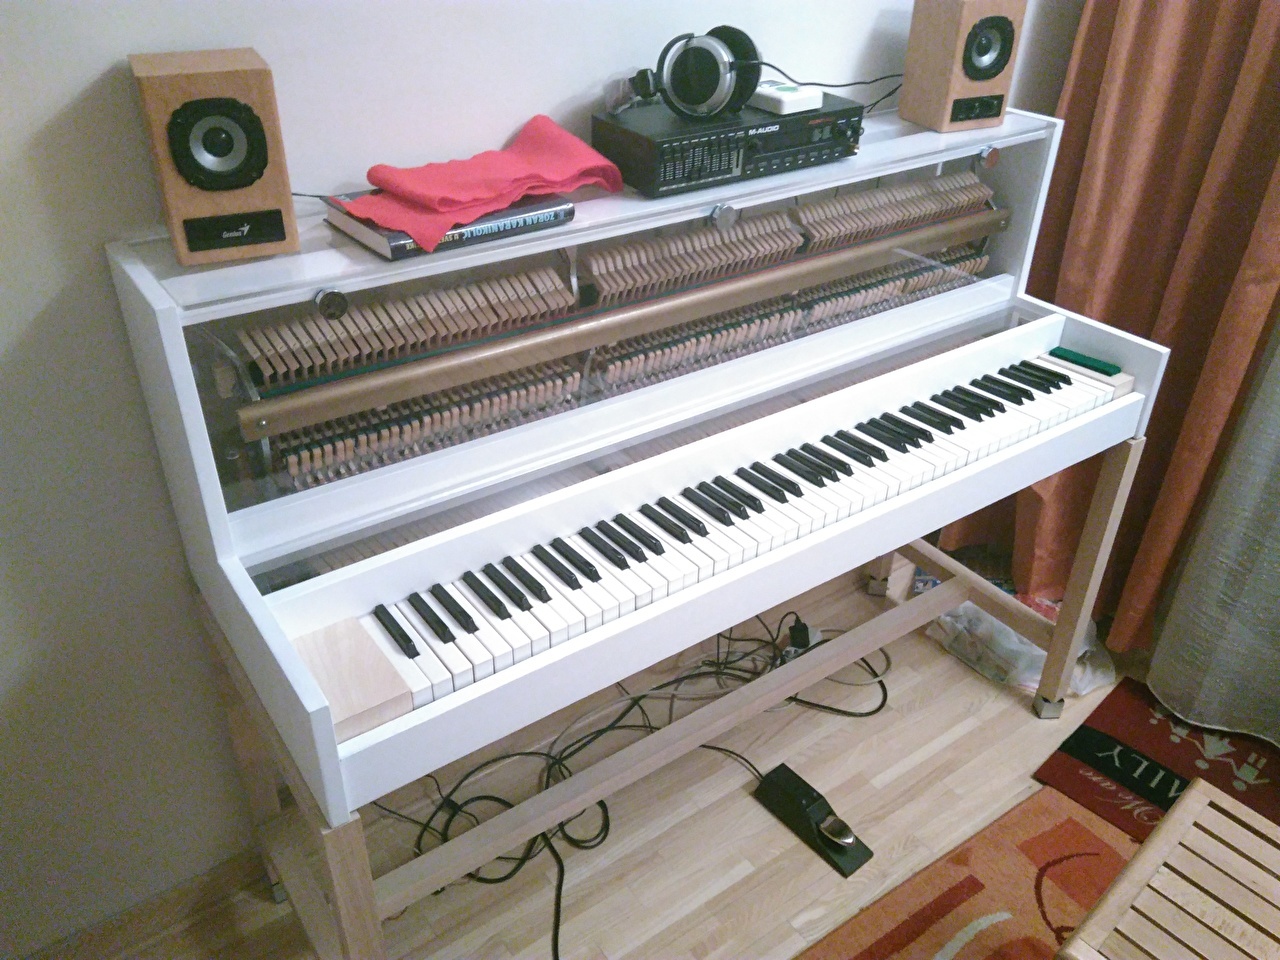 Hybrid piano. No strings just wooden mechanics.